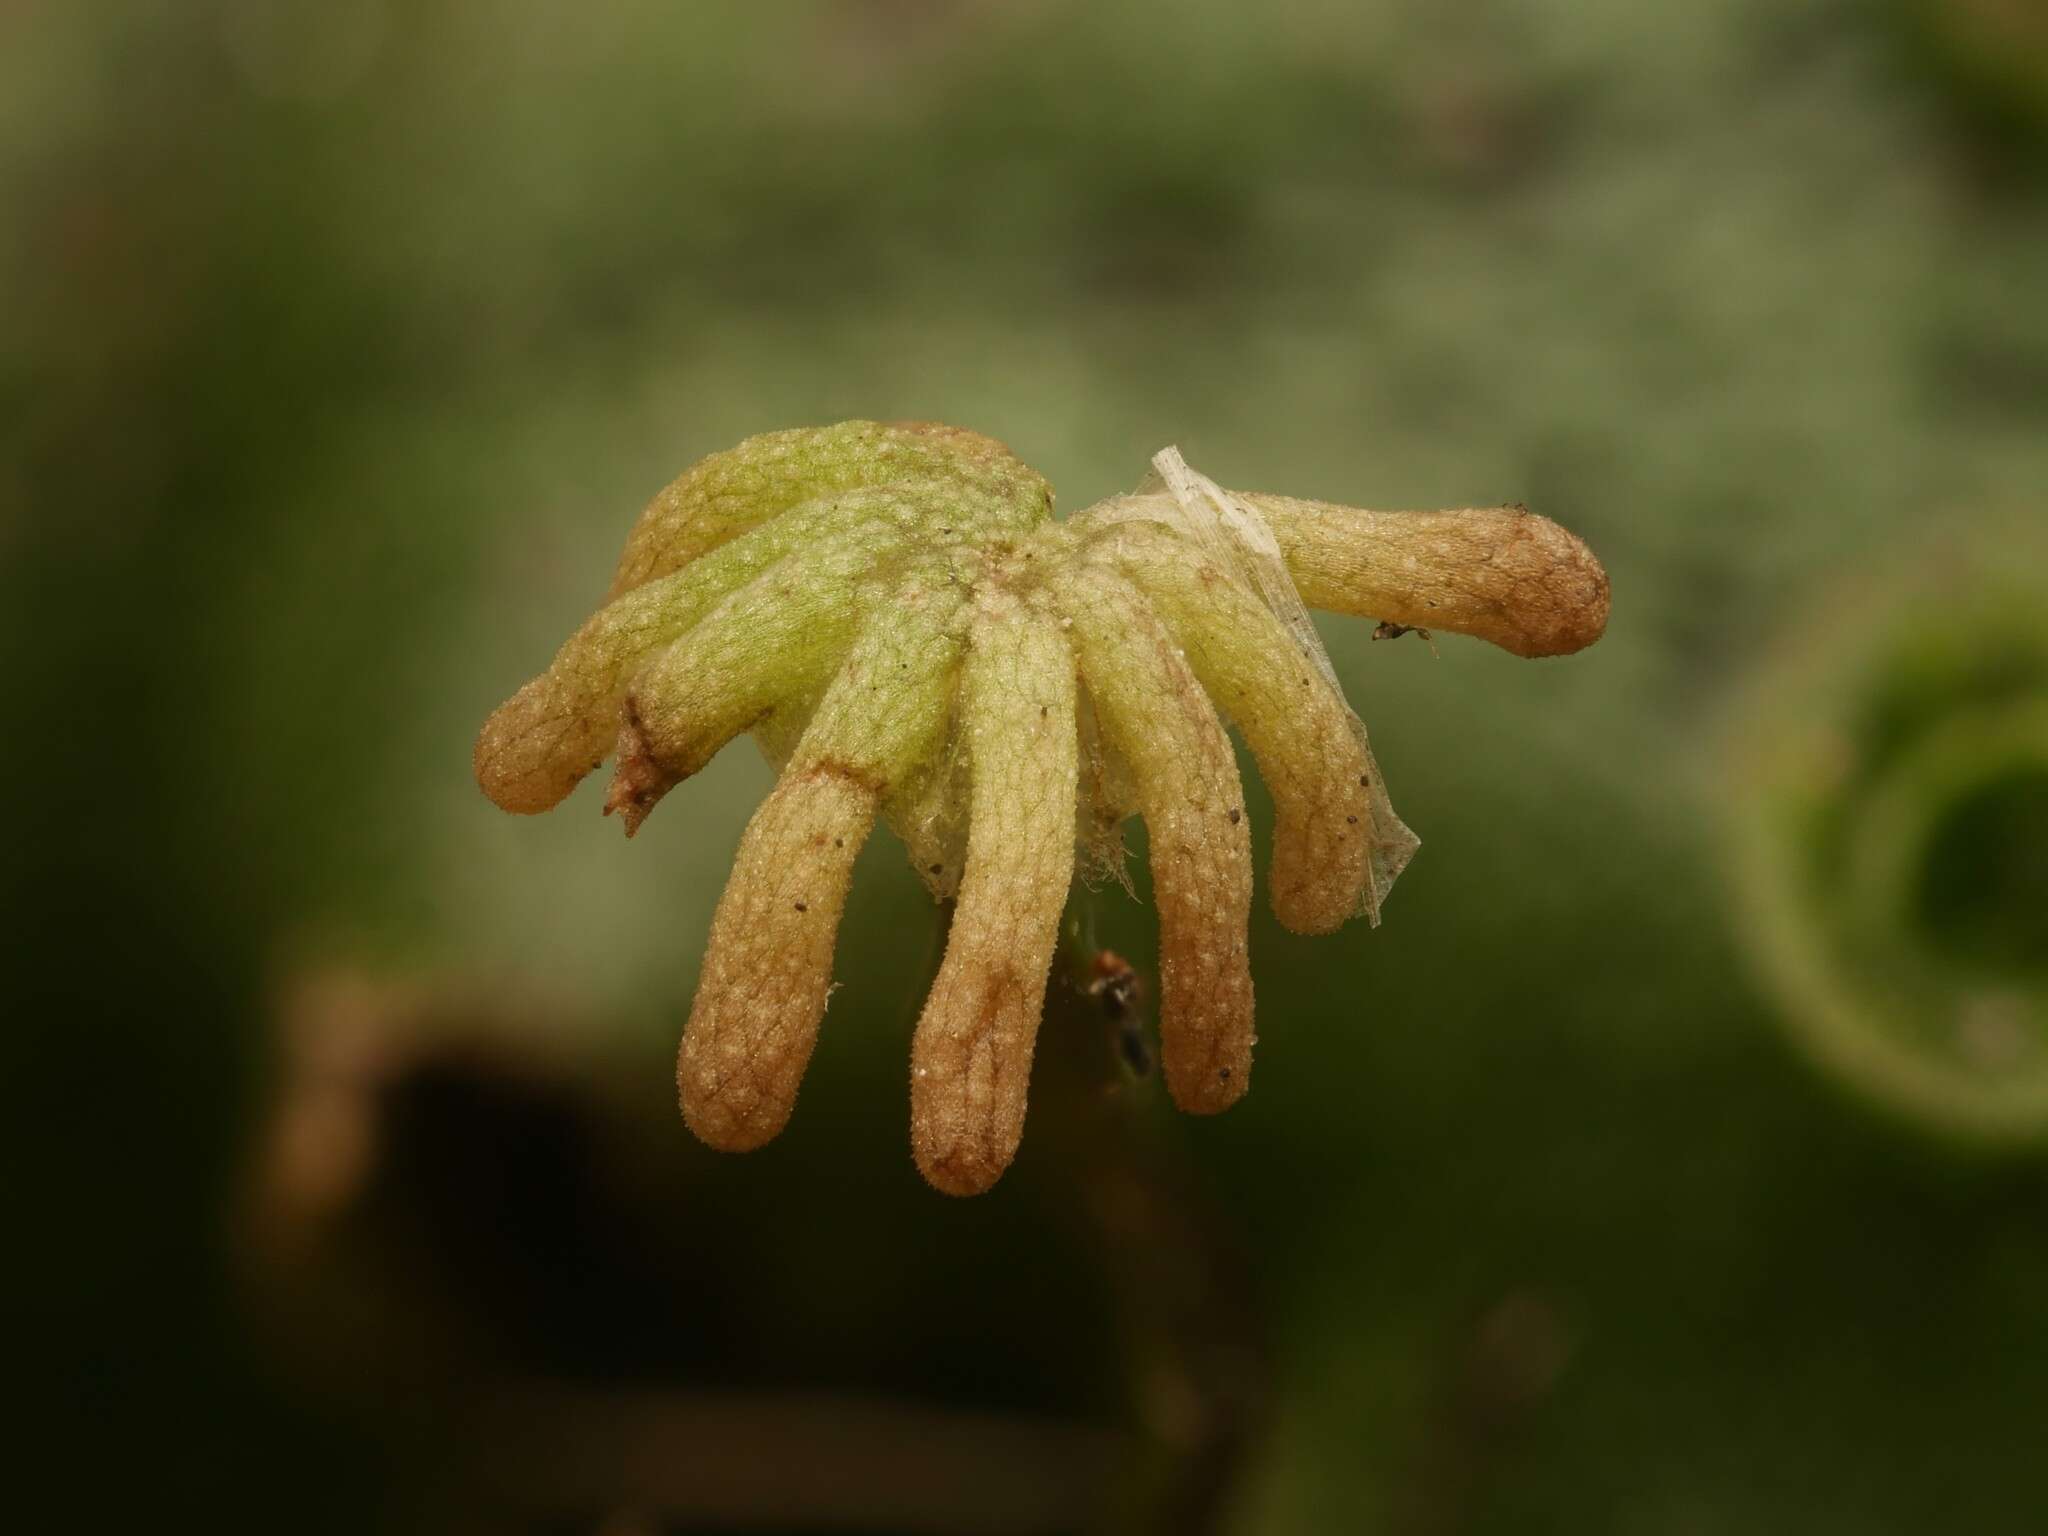 Image of common liverwort